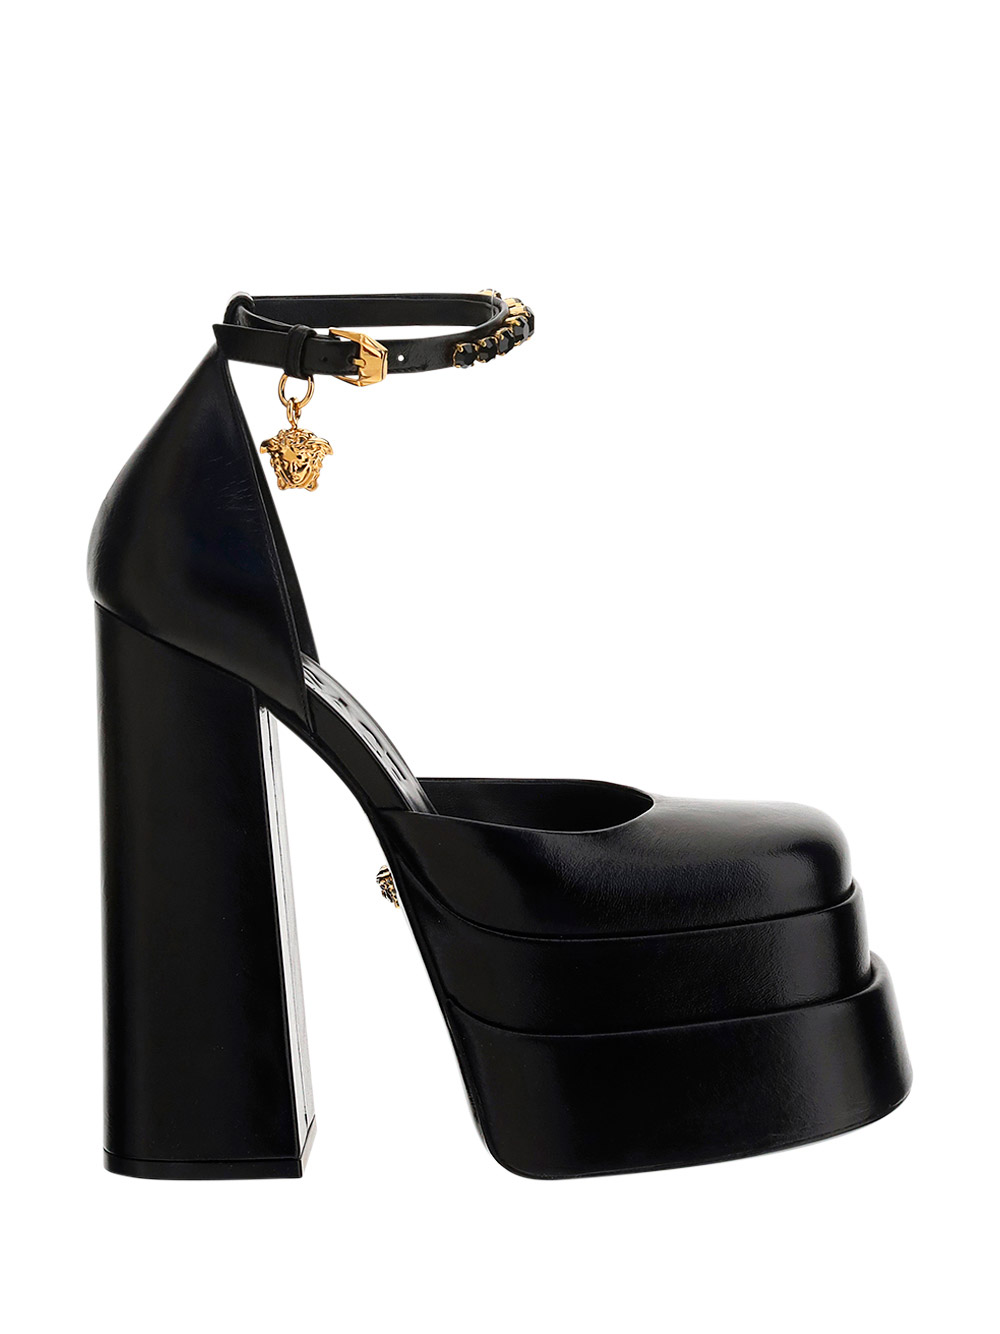 Versace Platform Sandals In Nero/oro | ModeSens